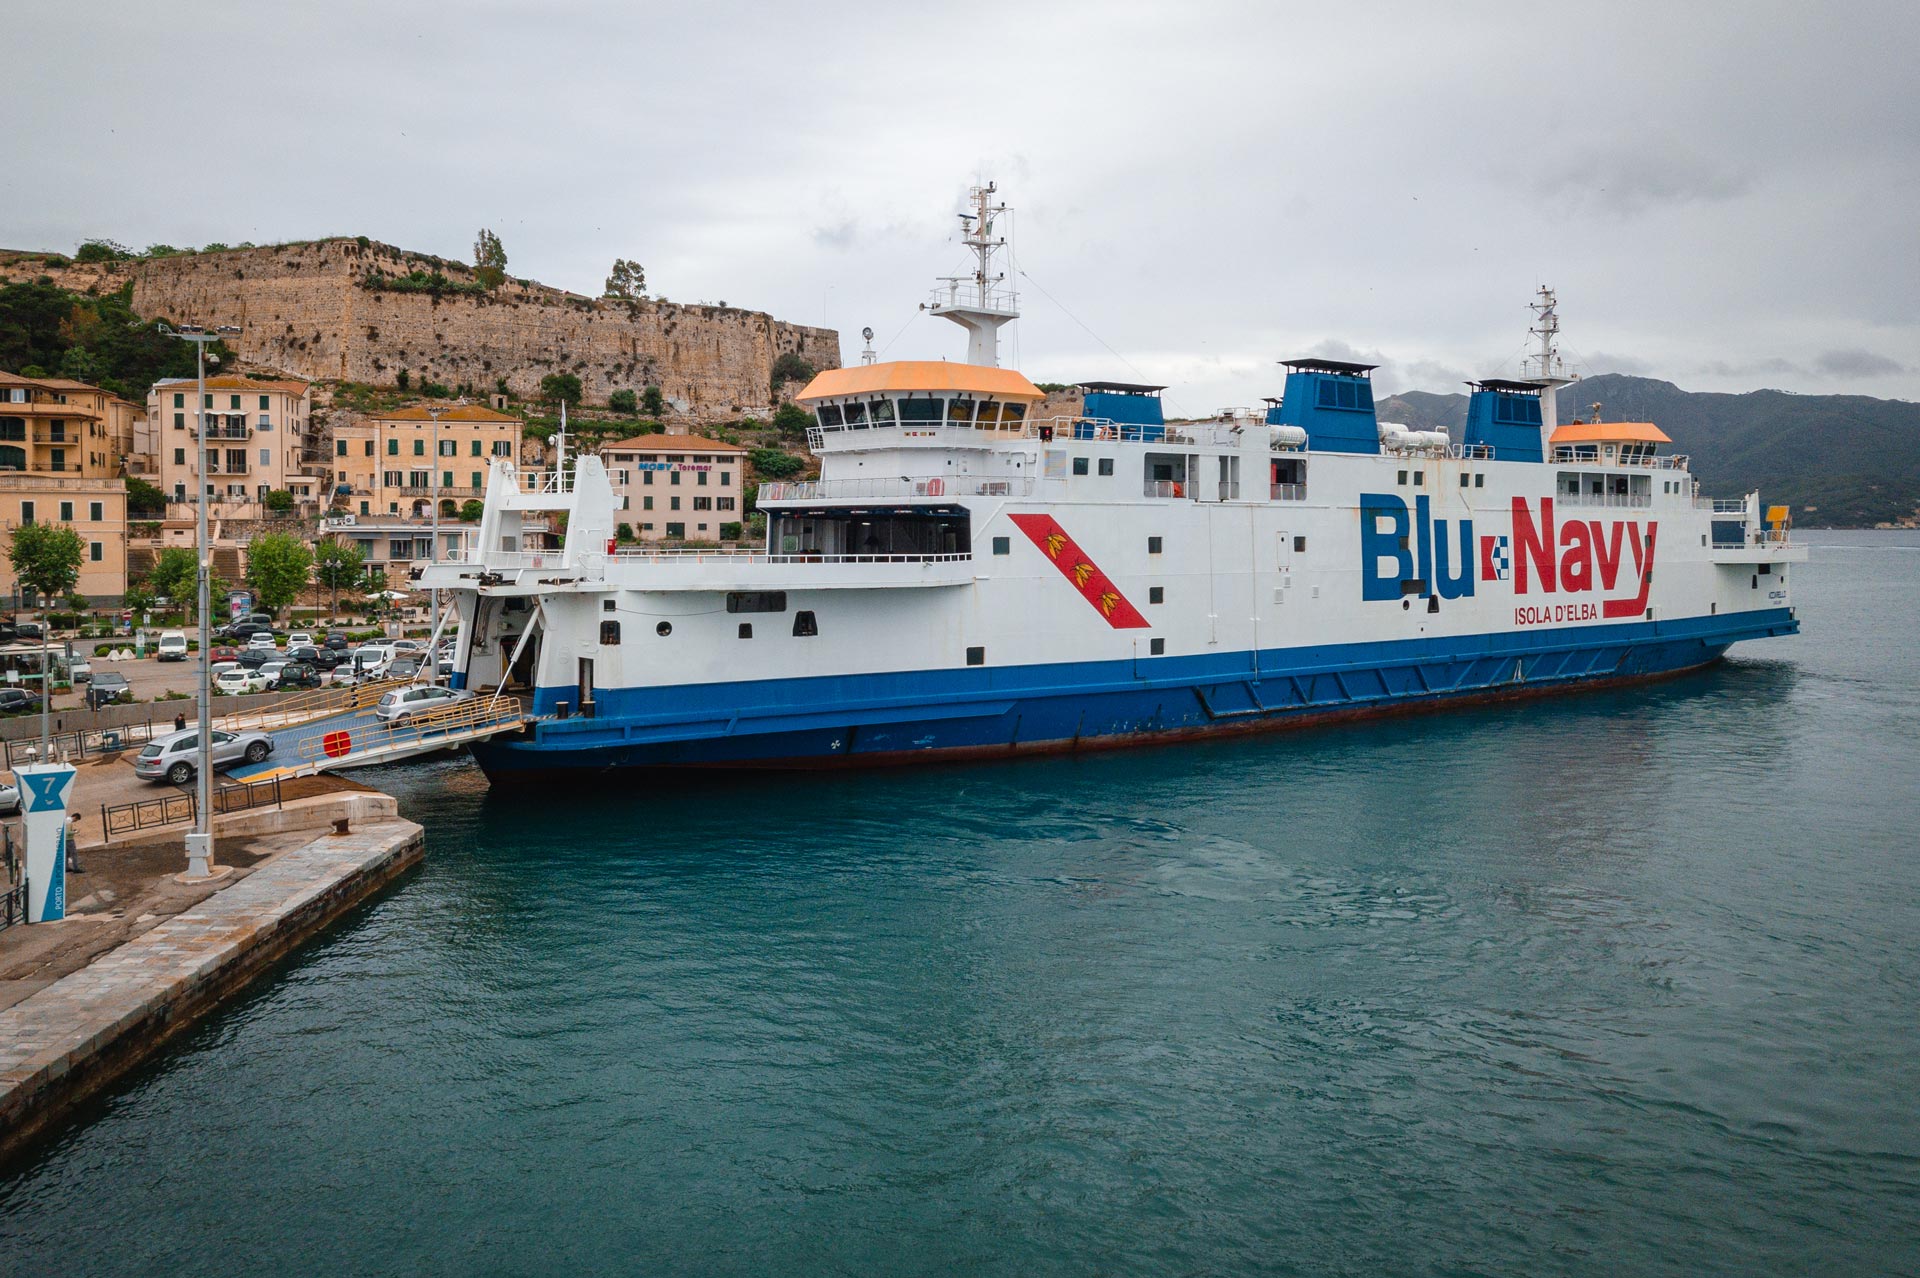 Ferry Blu Navy stopped at Portoferraio Elba island